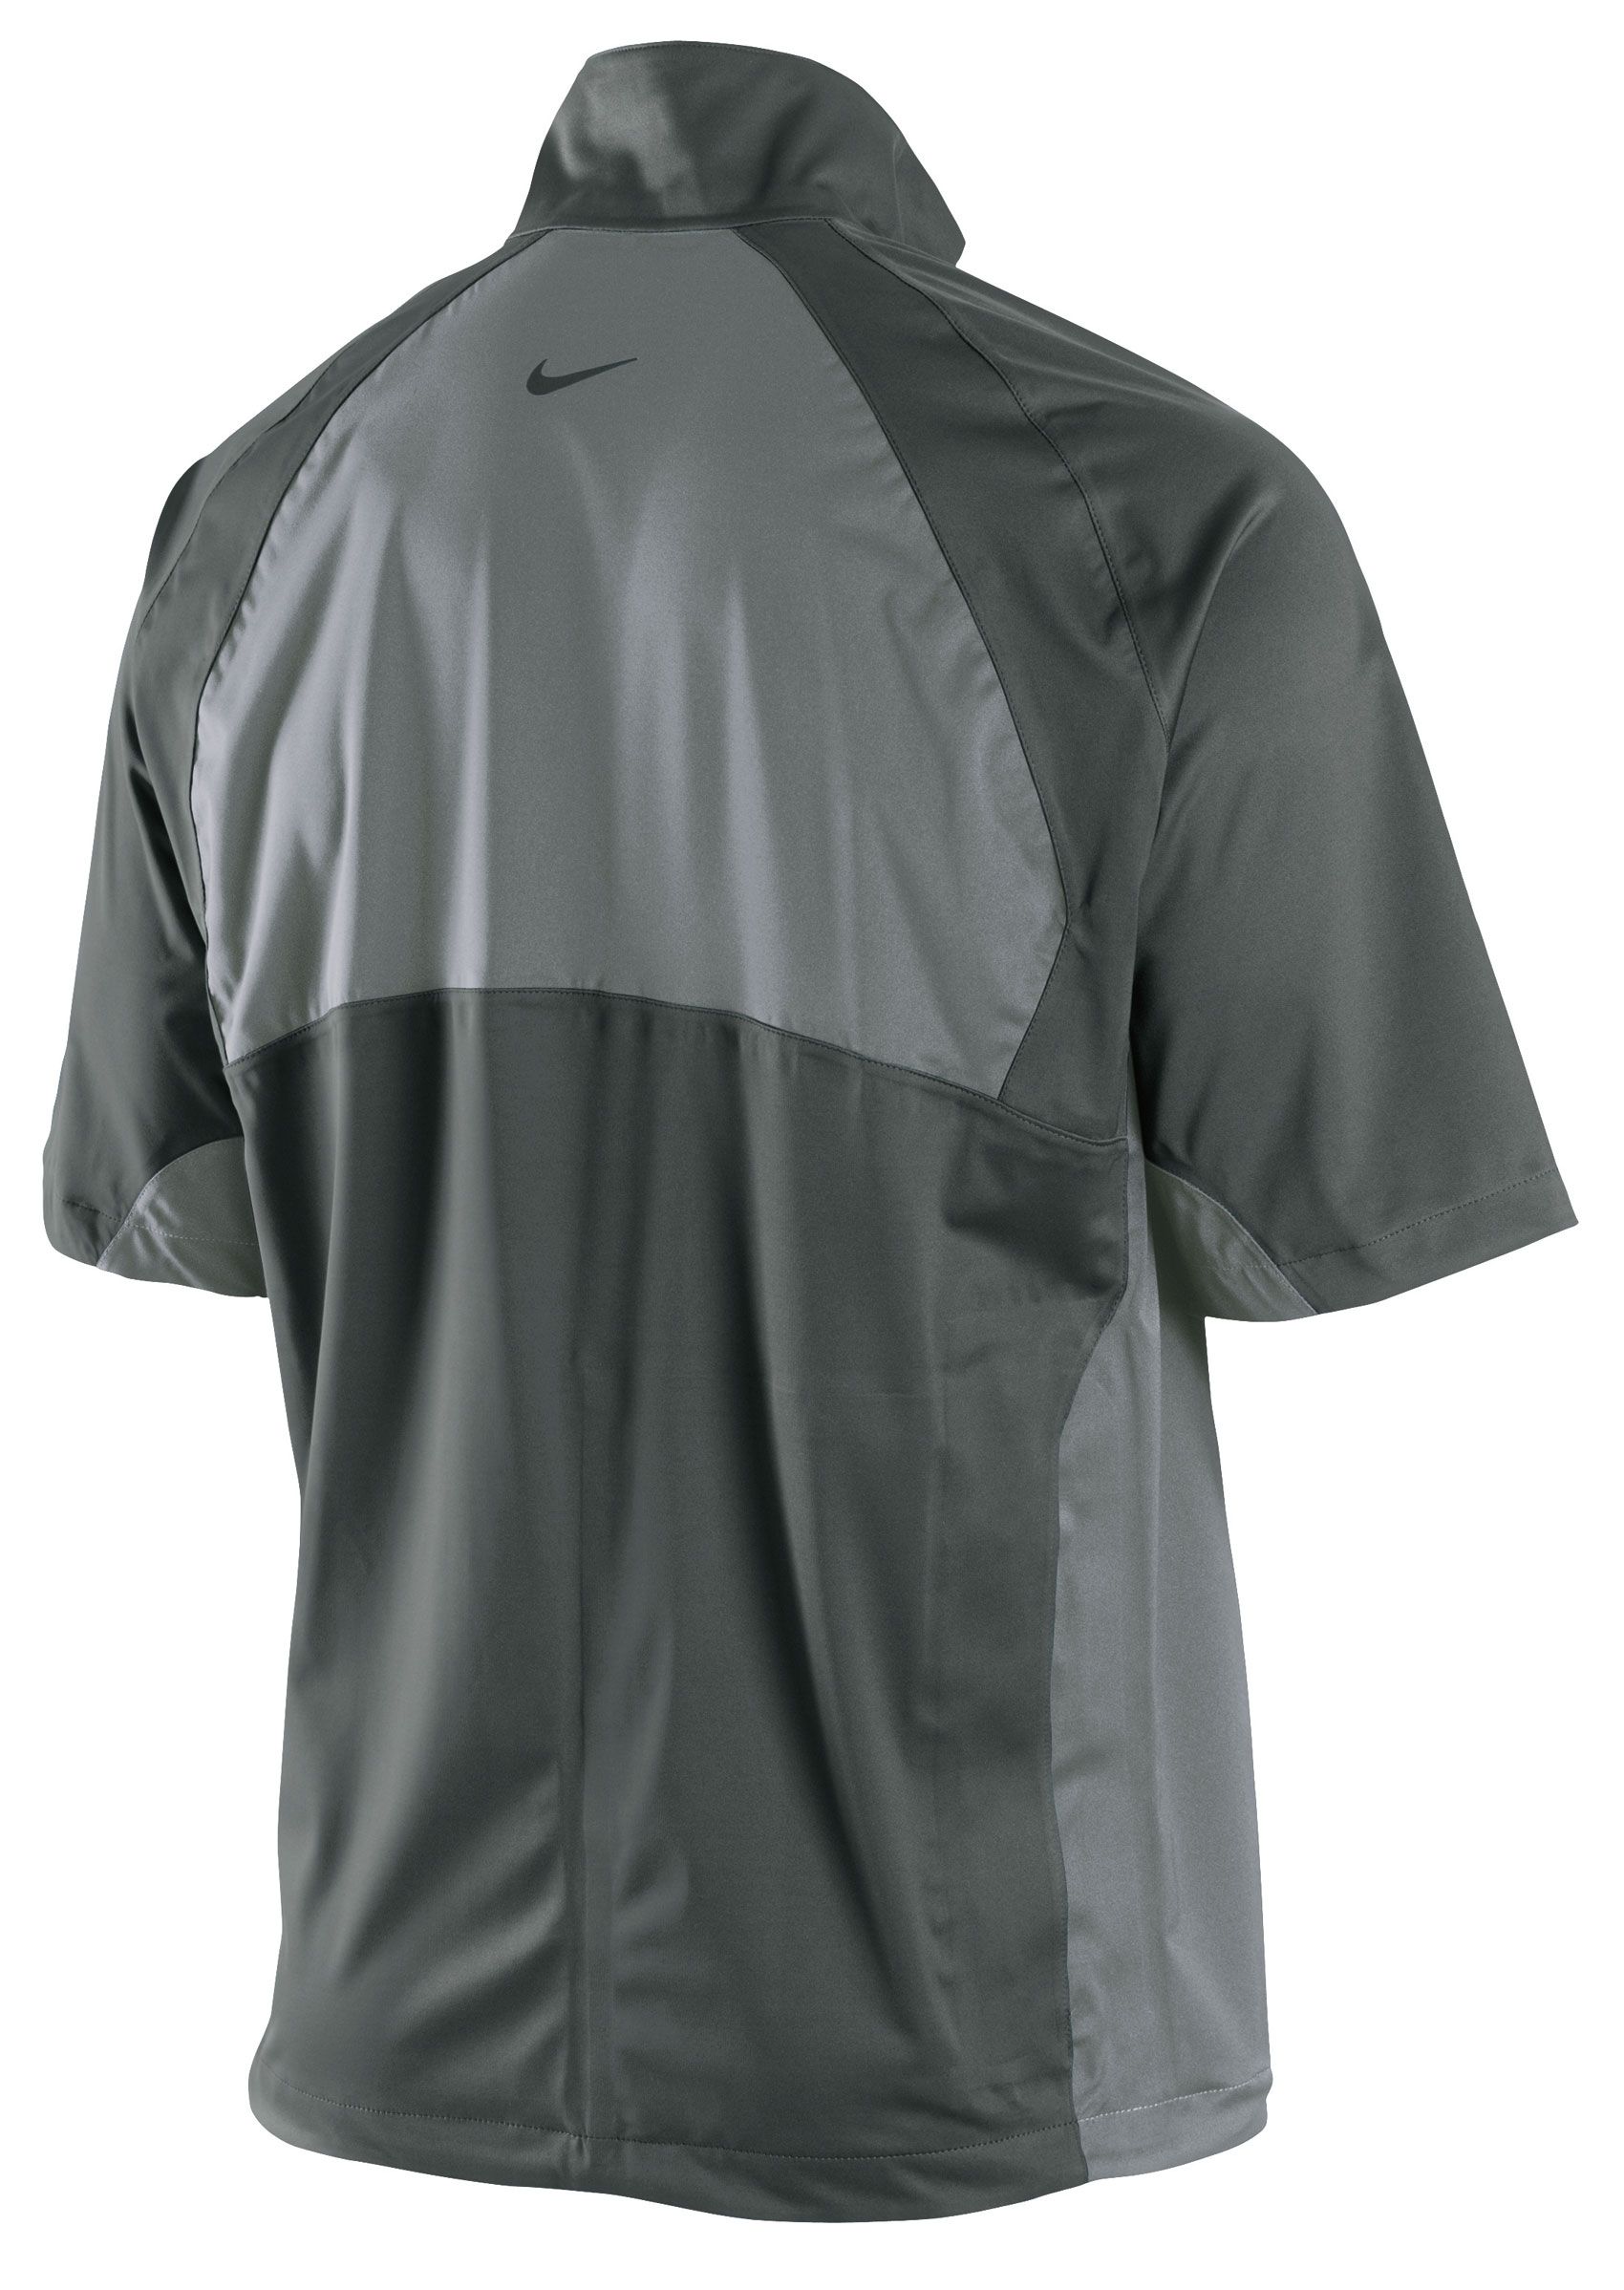 Nike Storm-Fit Short Sleeve Jacket 